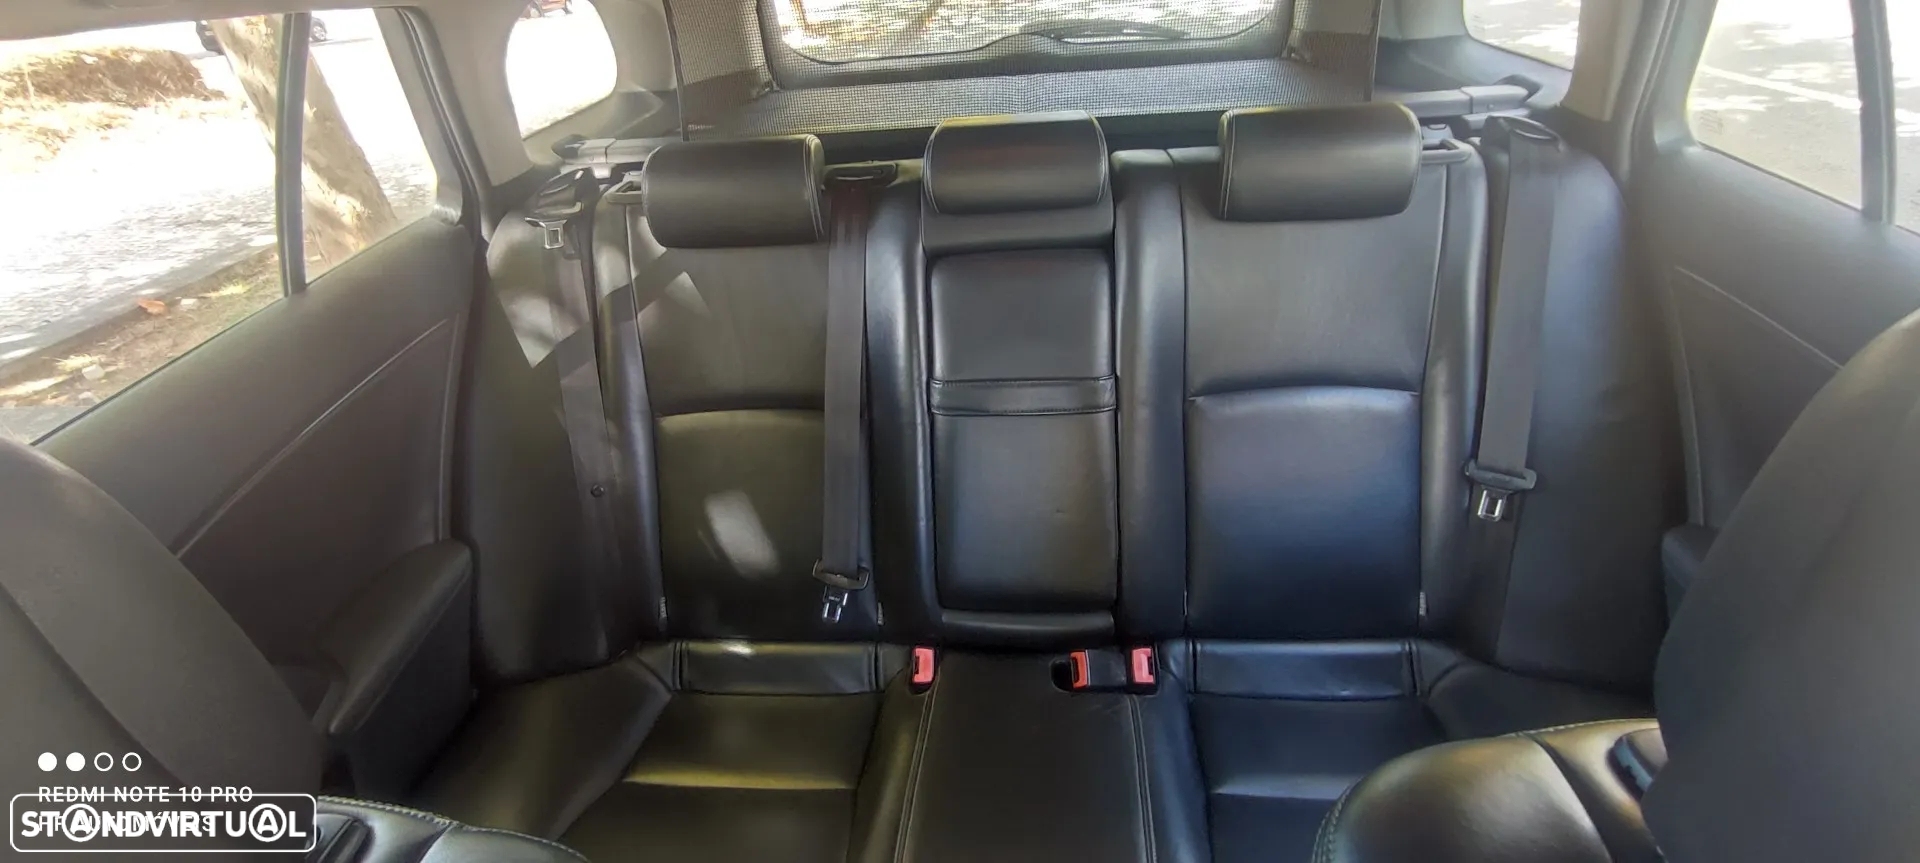 Toyota Avensis SW 2.0 D-4D Exclusive +Pele+GPS - 19